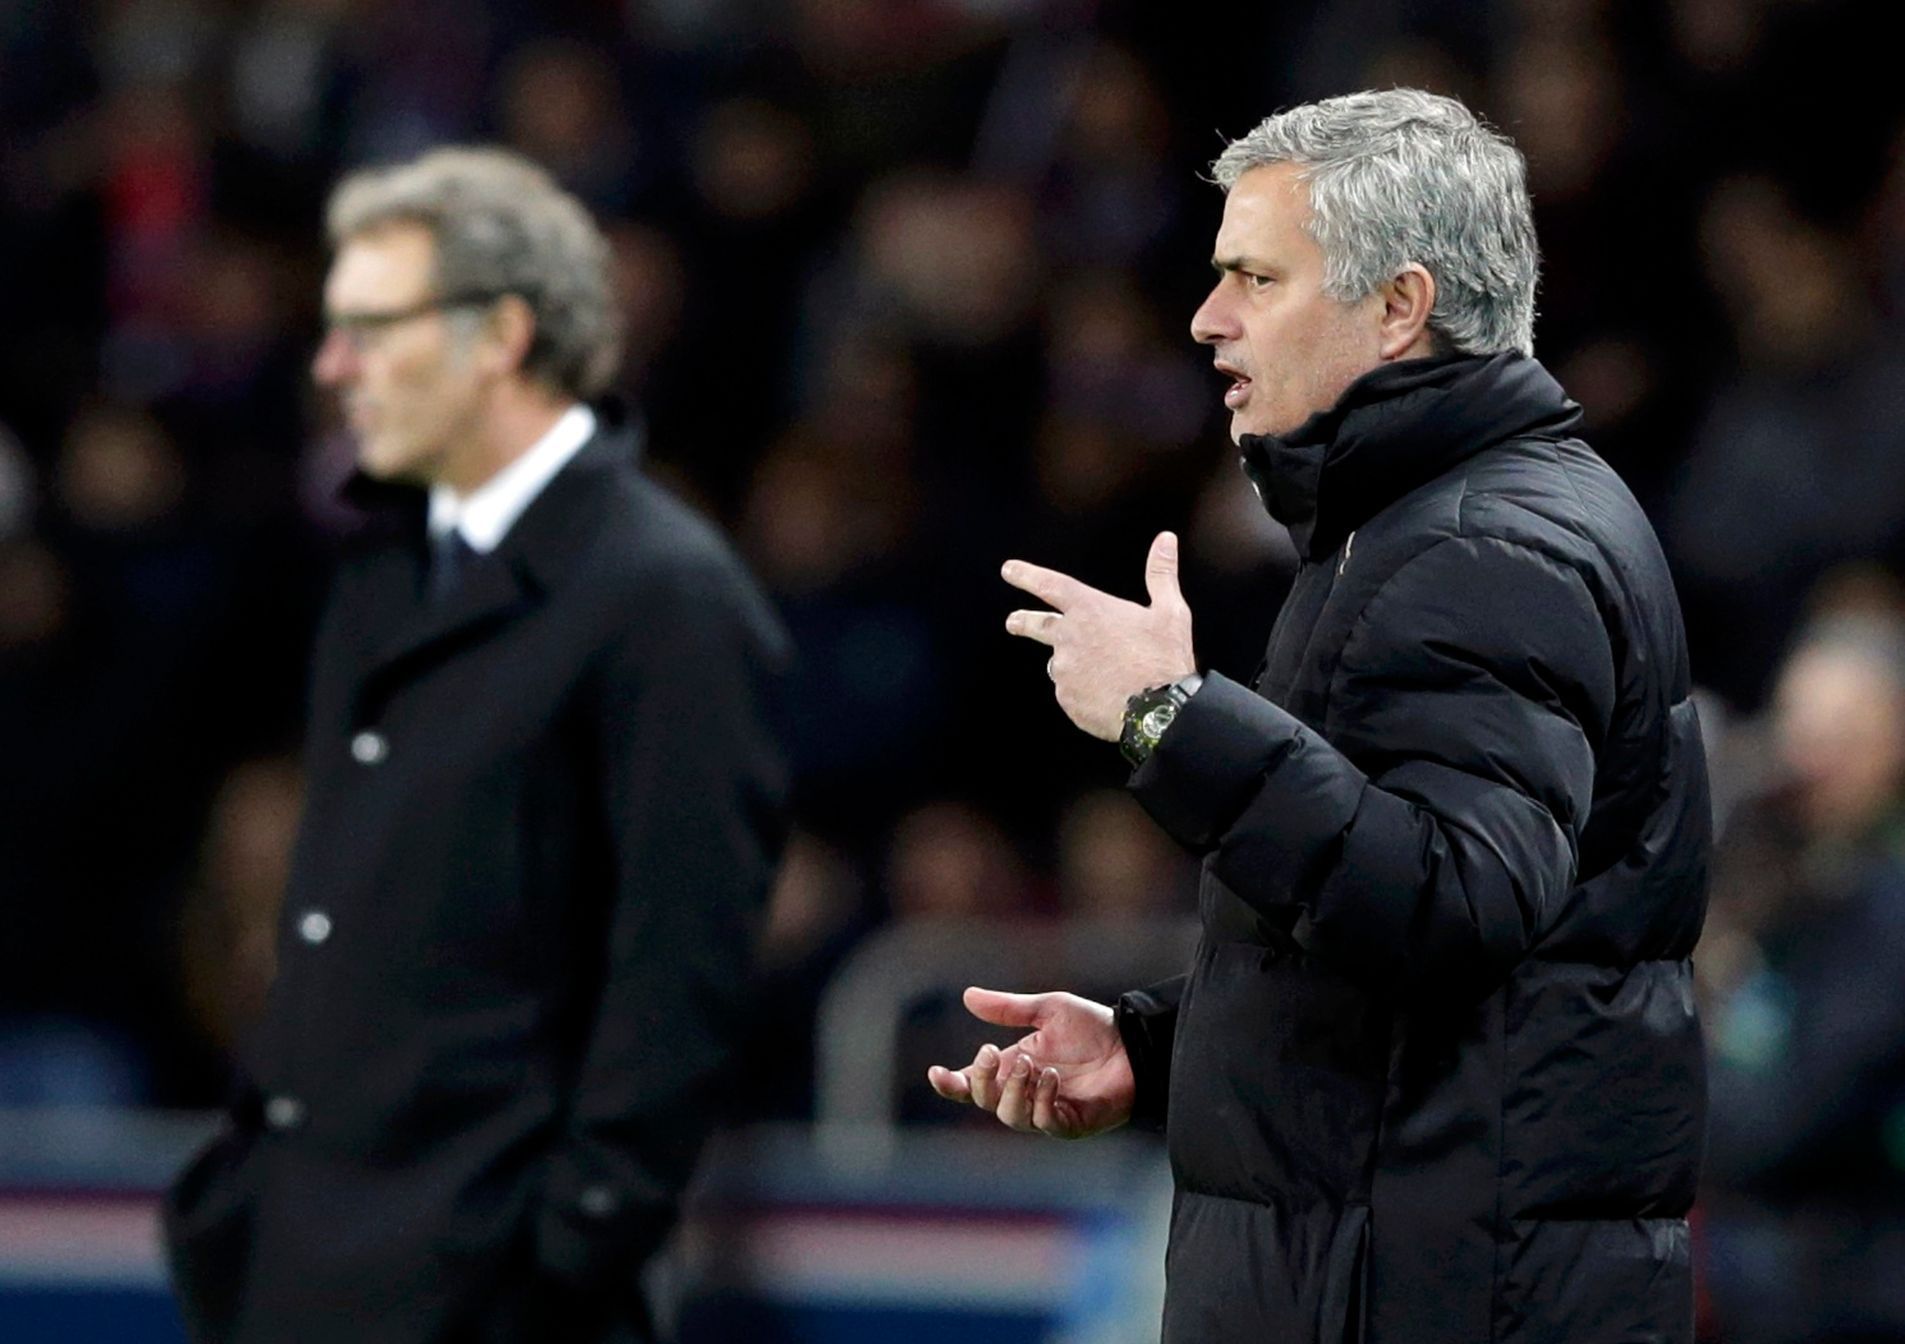 Chelsea's coach Mourinho reacts near Paris St Germain's coach Blanc during their Champions League round of 16 first leg soccer match at the Parc des Princes Stadium in Paris